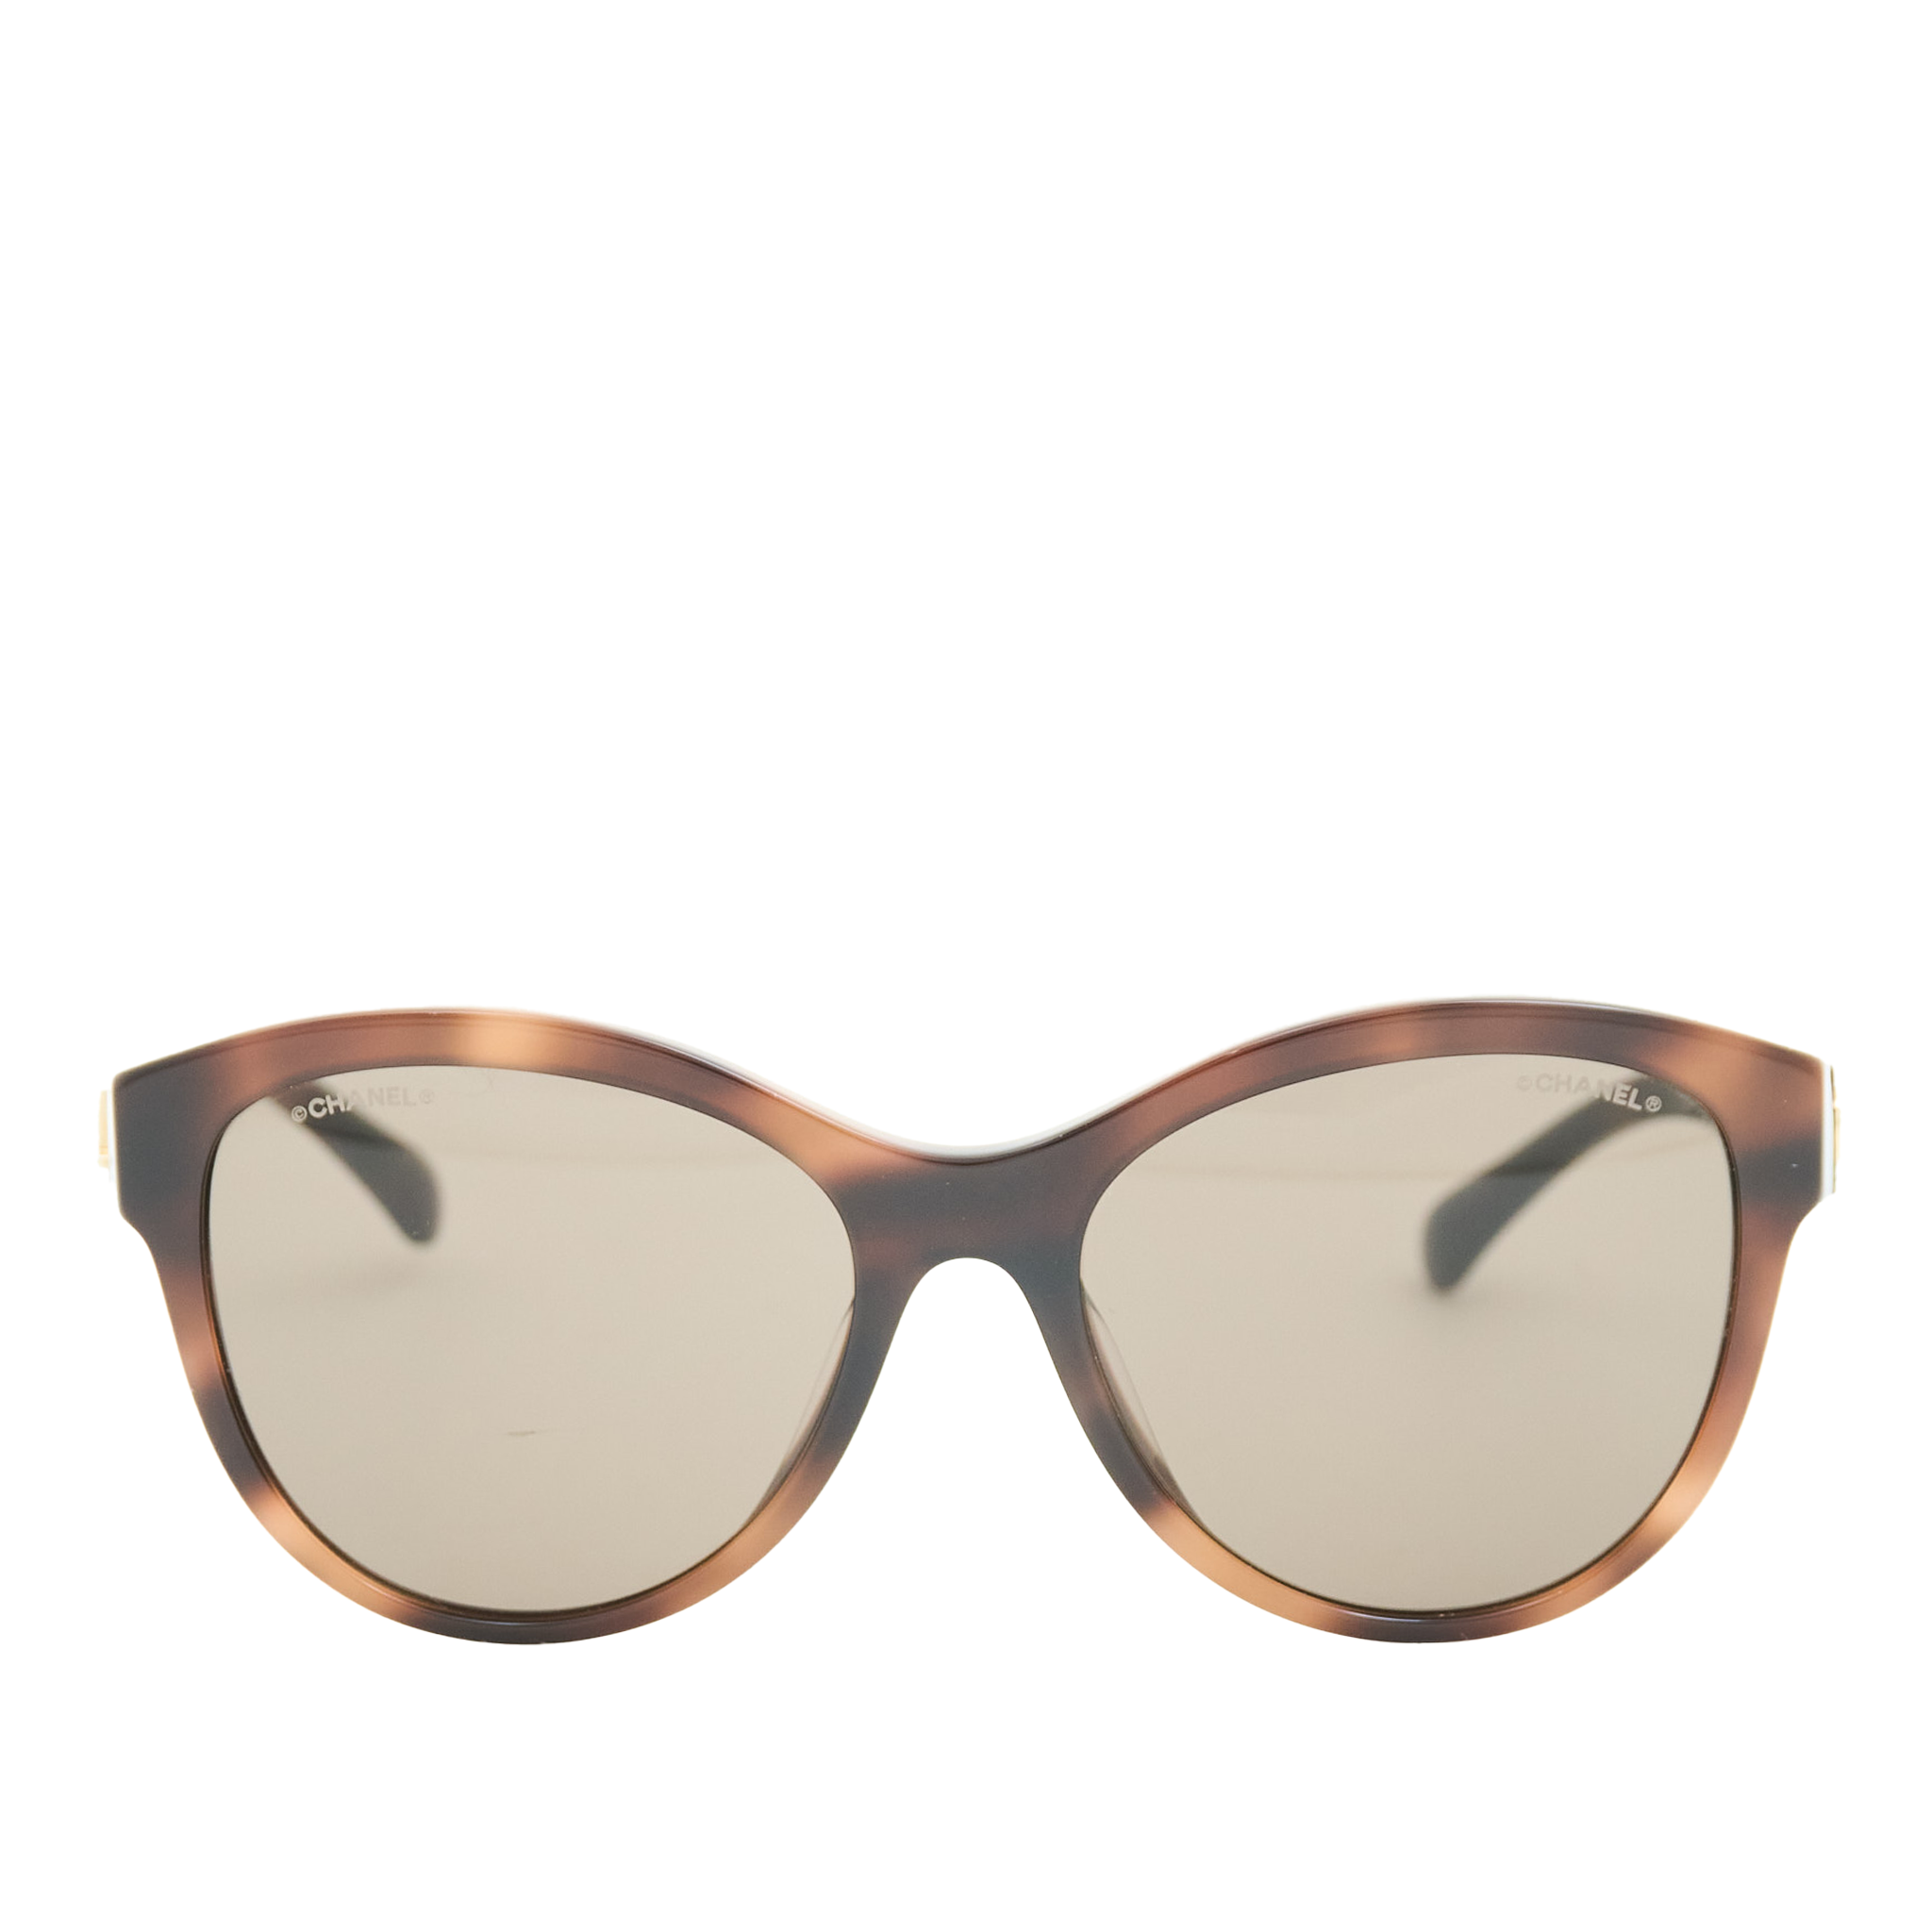 Chanel Brown Tortoise Shell Sunglasses